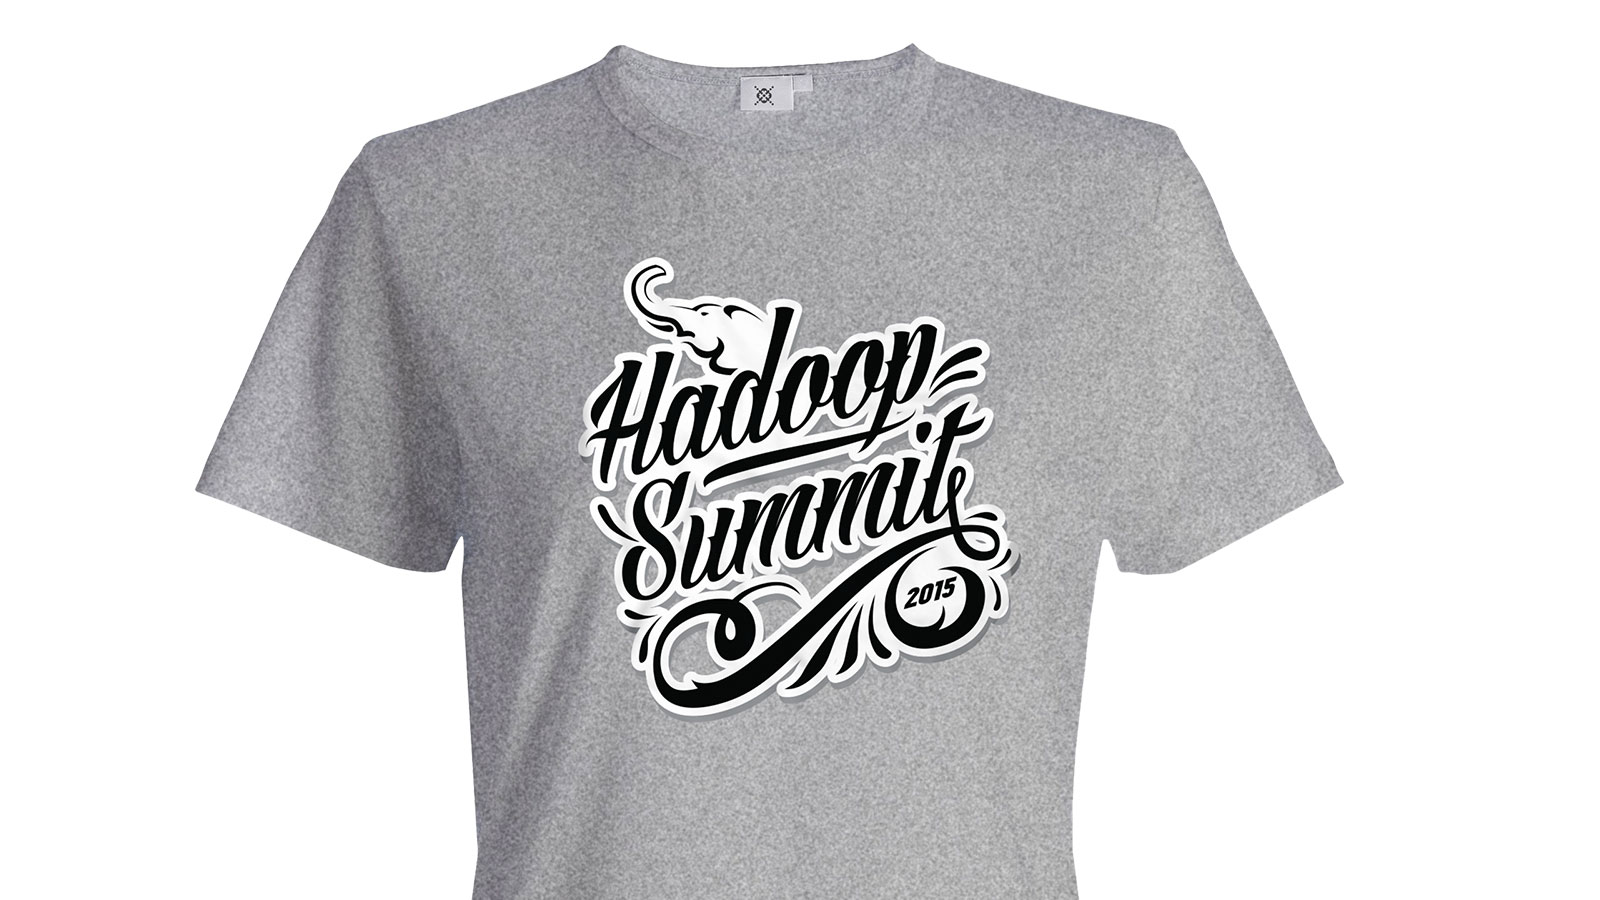 Hortonworks Hadoop Summit T-Shirt Design